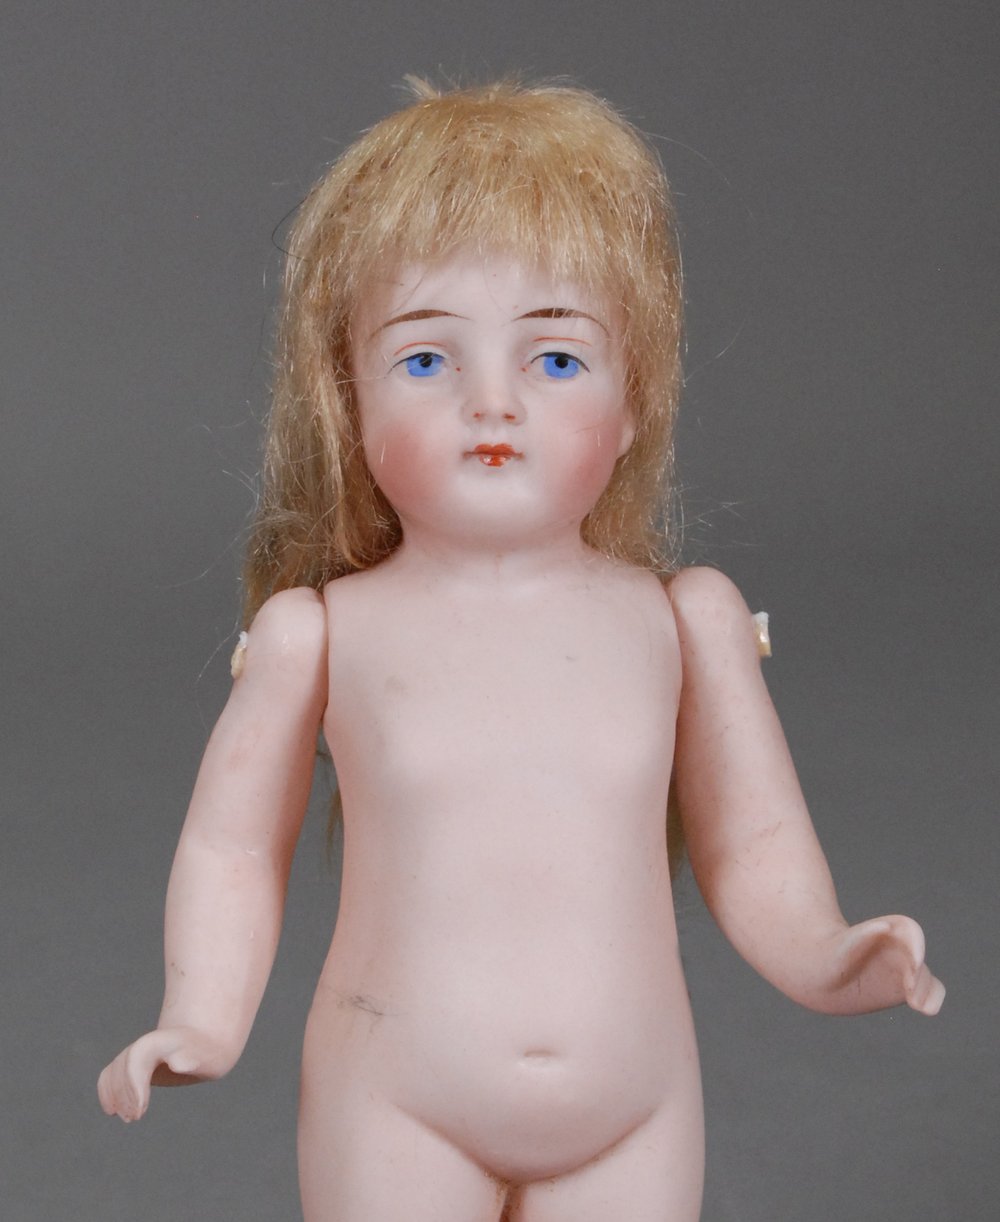 Antique Miniature Dolls / All-Bisque Dolls - Historical and Circus Figures  - Ref P464